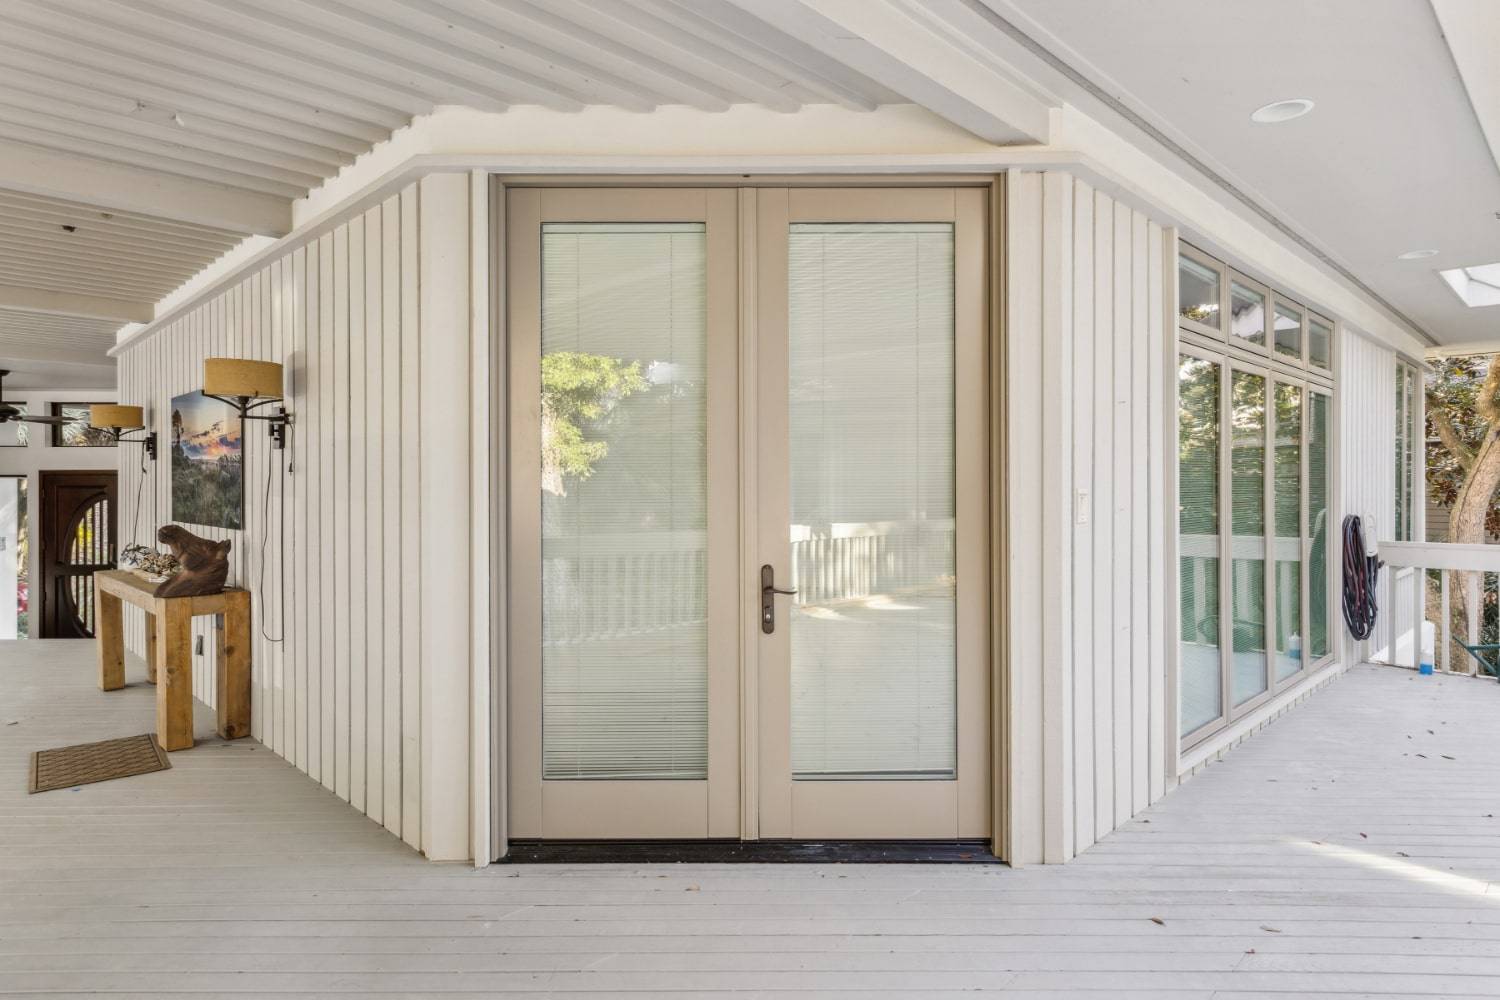 Winslow Design Studio is the Hilton Head Island leader in custom windows and doors